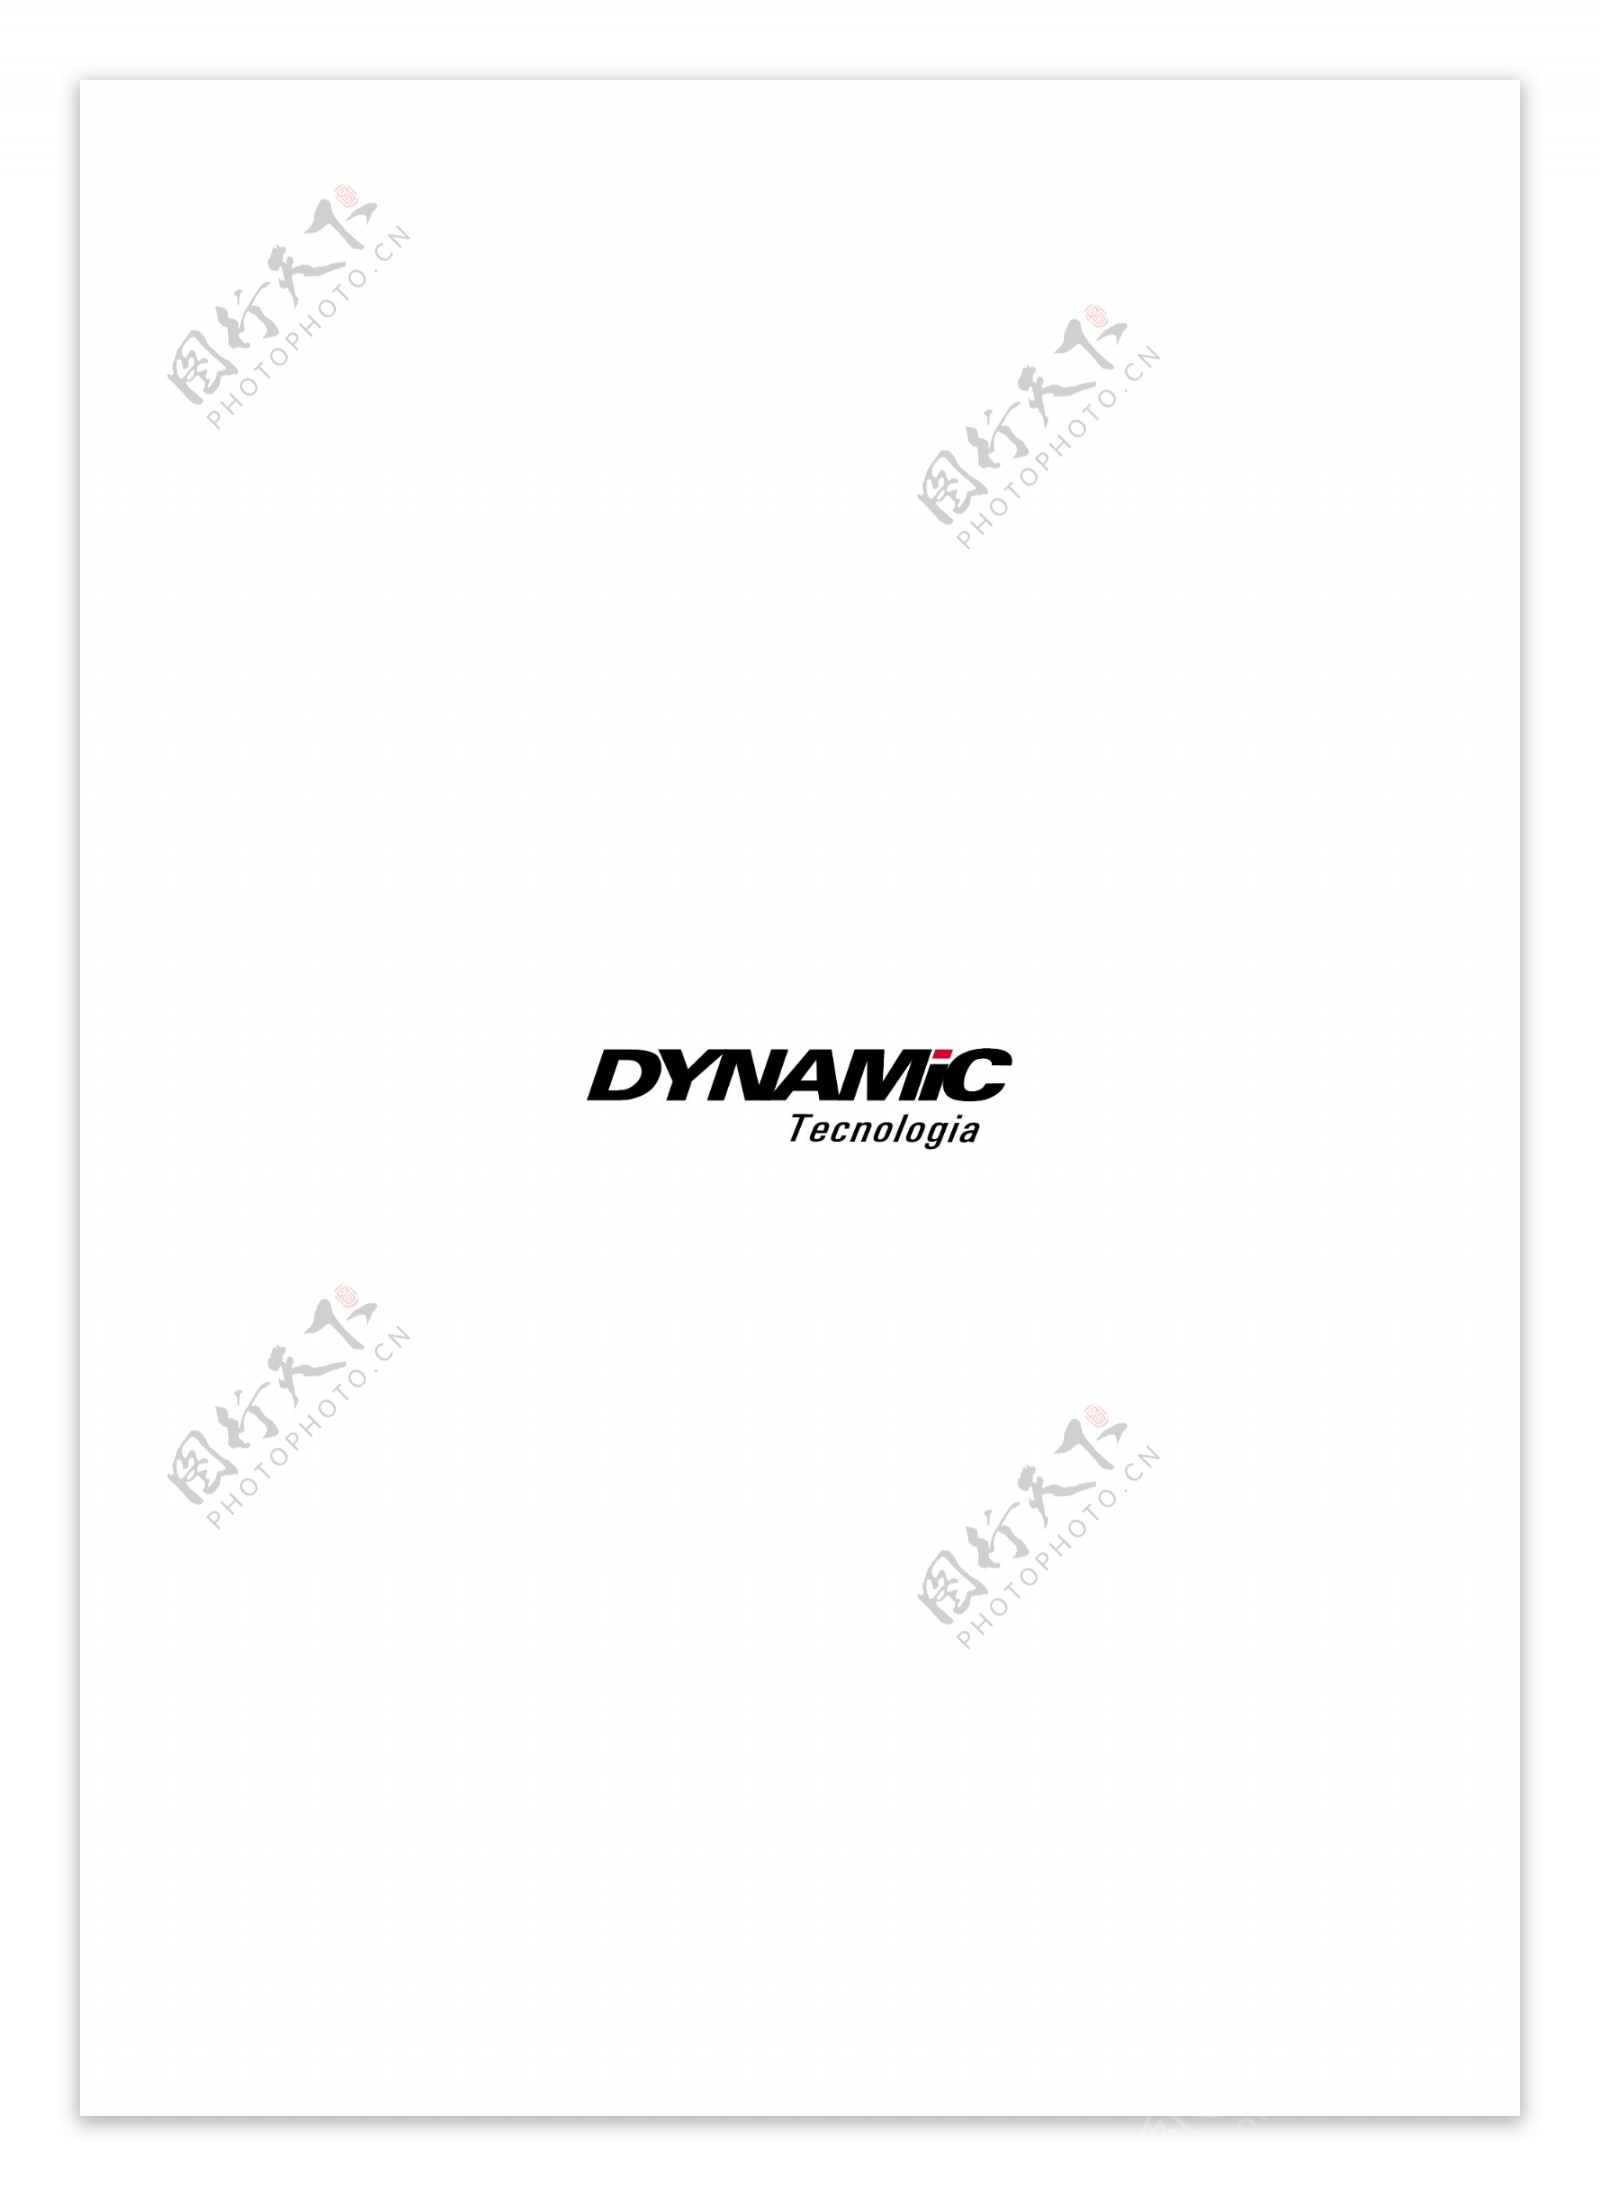 DynamicTecnologialogo设计欣赏DynamicTecnologia服务公司LOGO下载标志设计欣赏